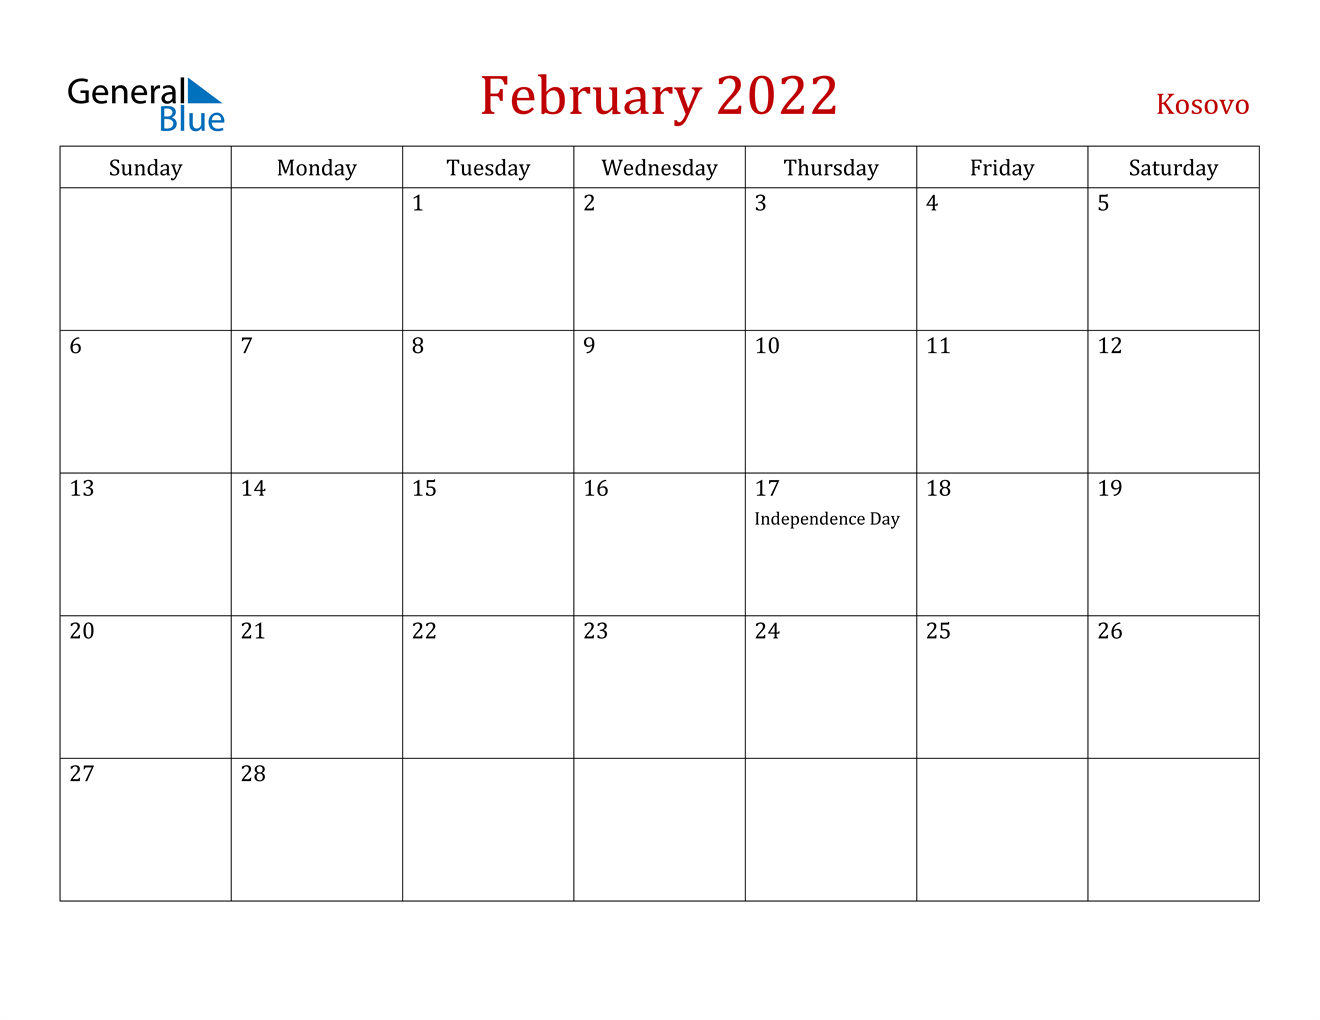 February 2022 Calendar - Kosovo